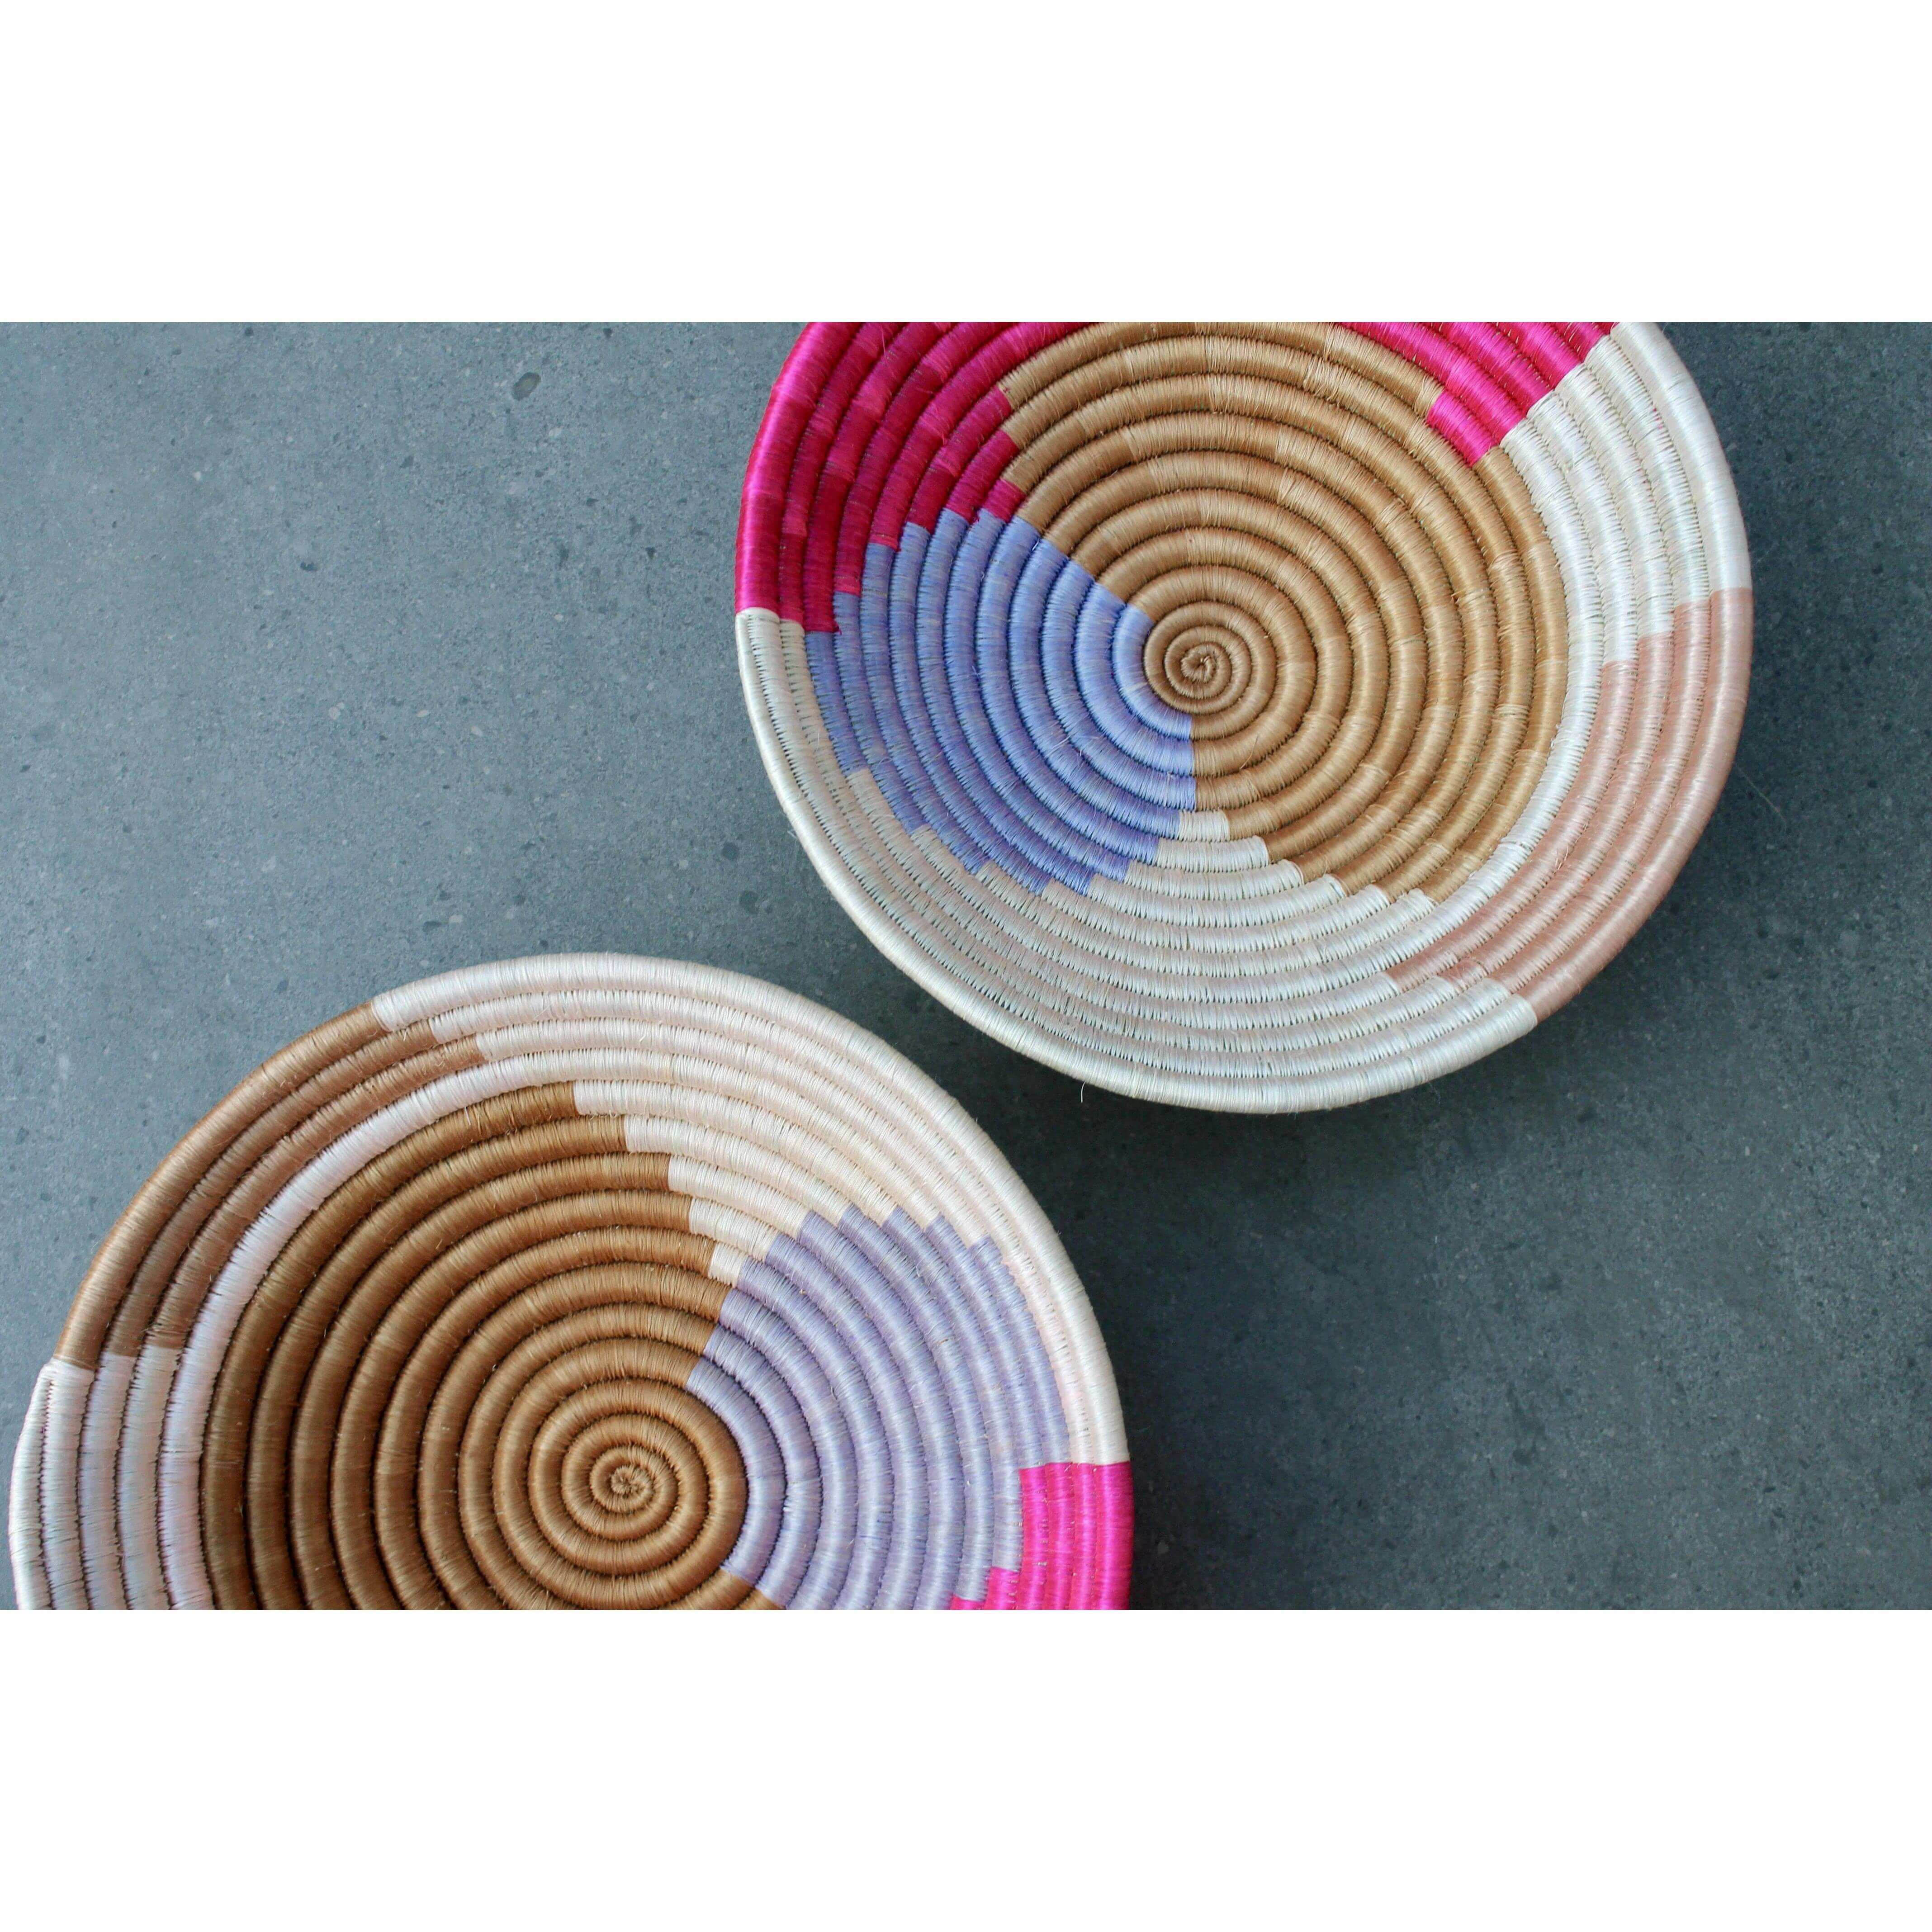 Colourful seagrass basket bowls made by Rwandan artisans